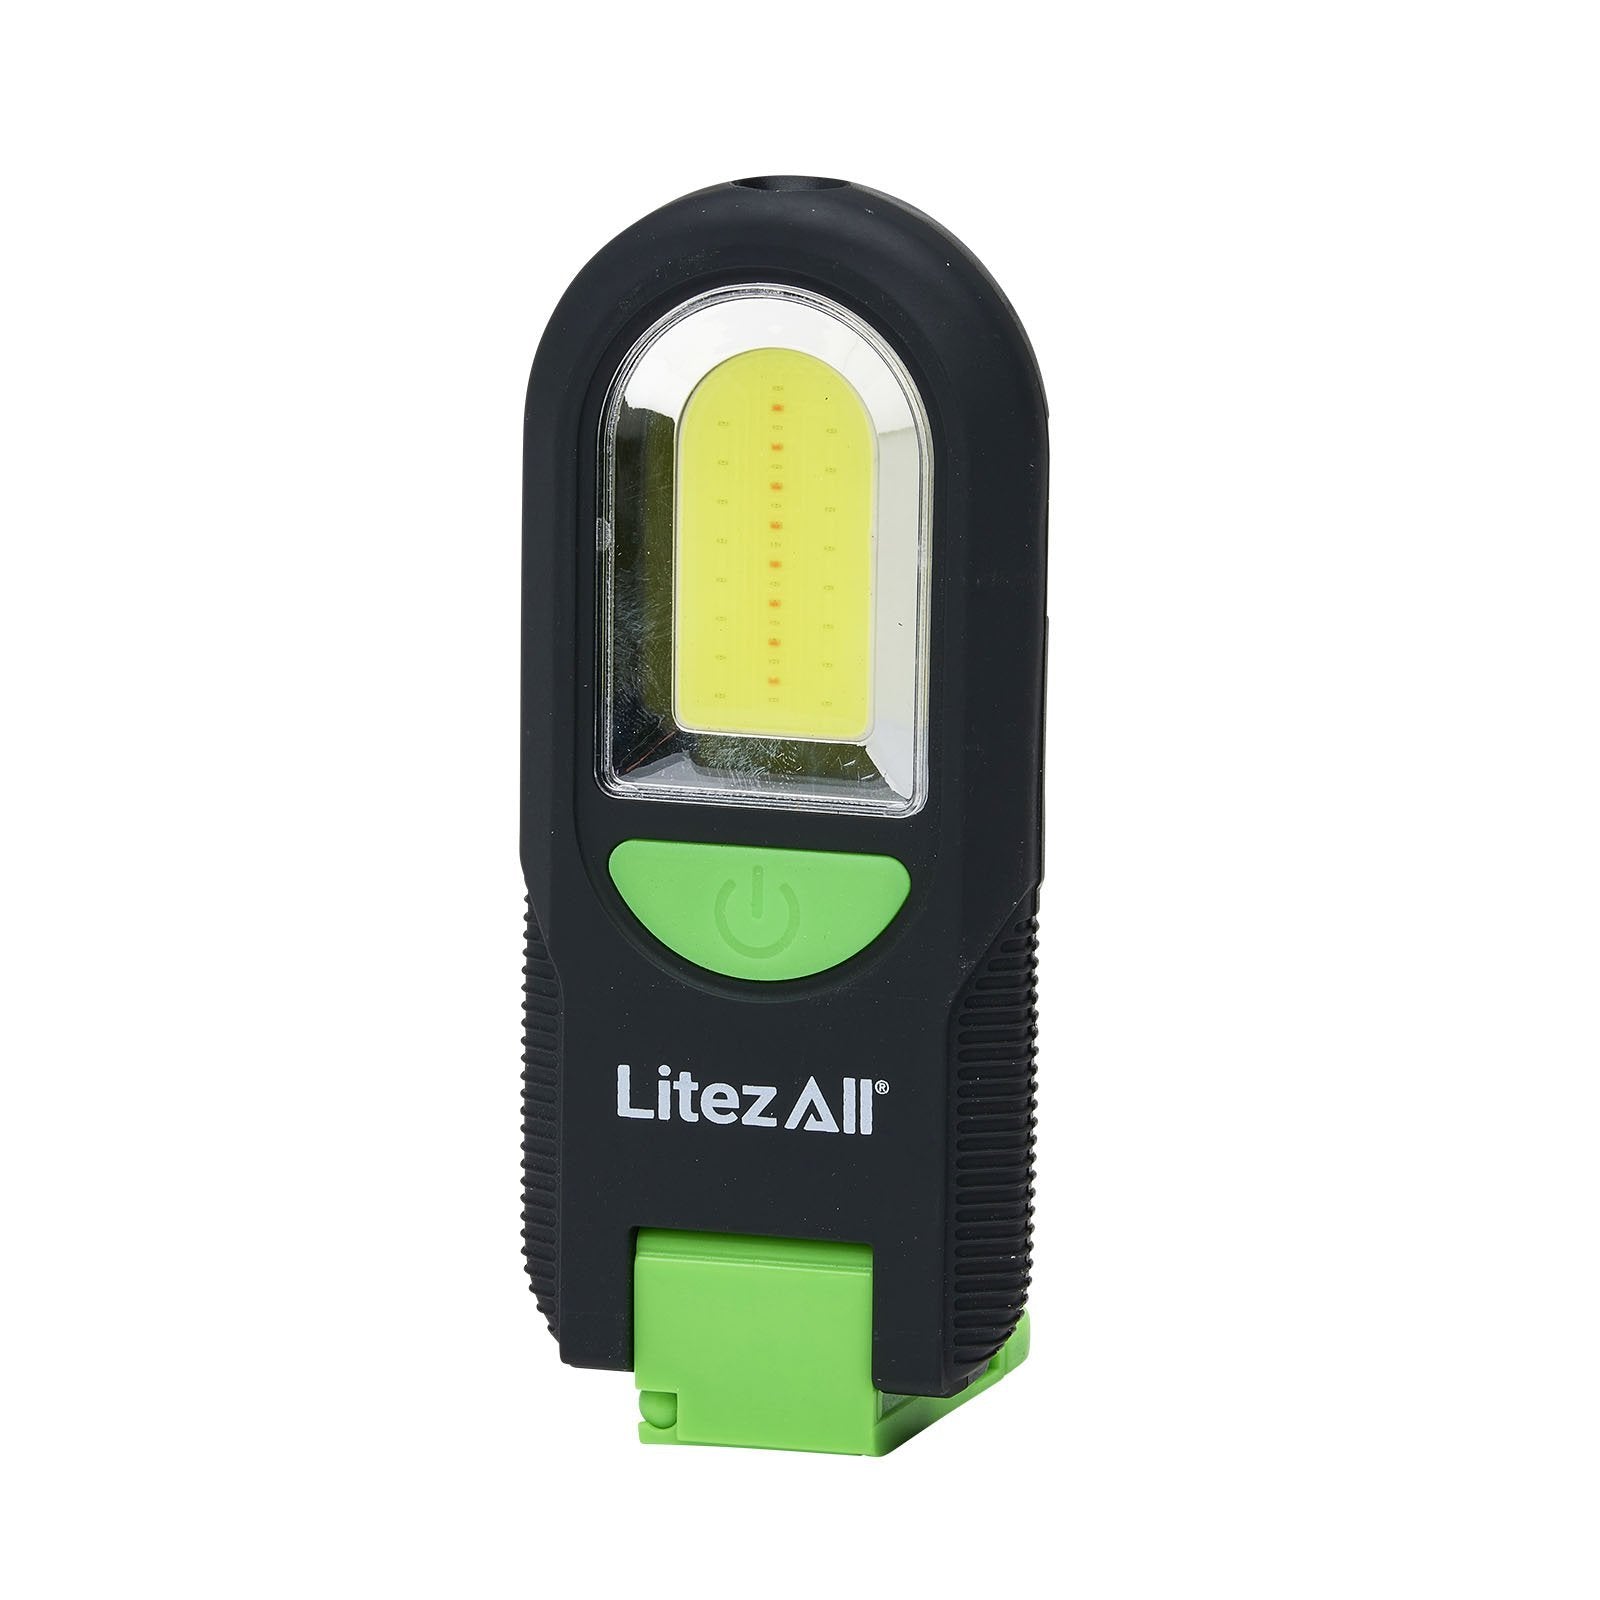 LitezAll Rechargeable Work Light and Emergency Light - LitezAll - Work Lights - 52